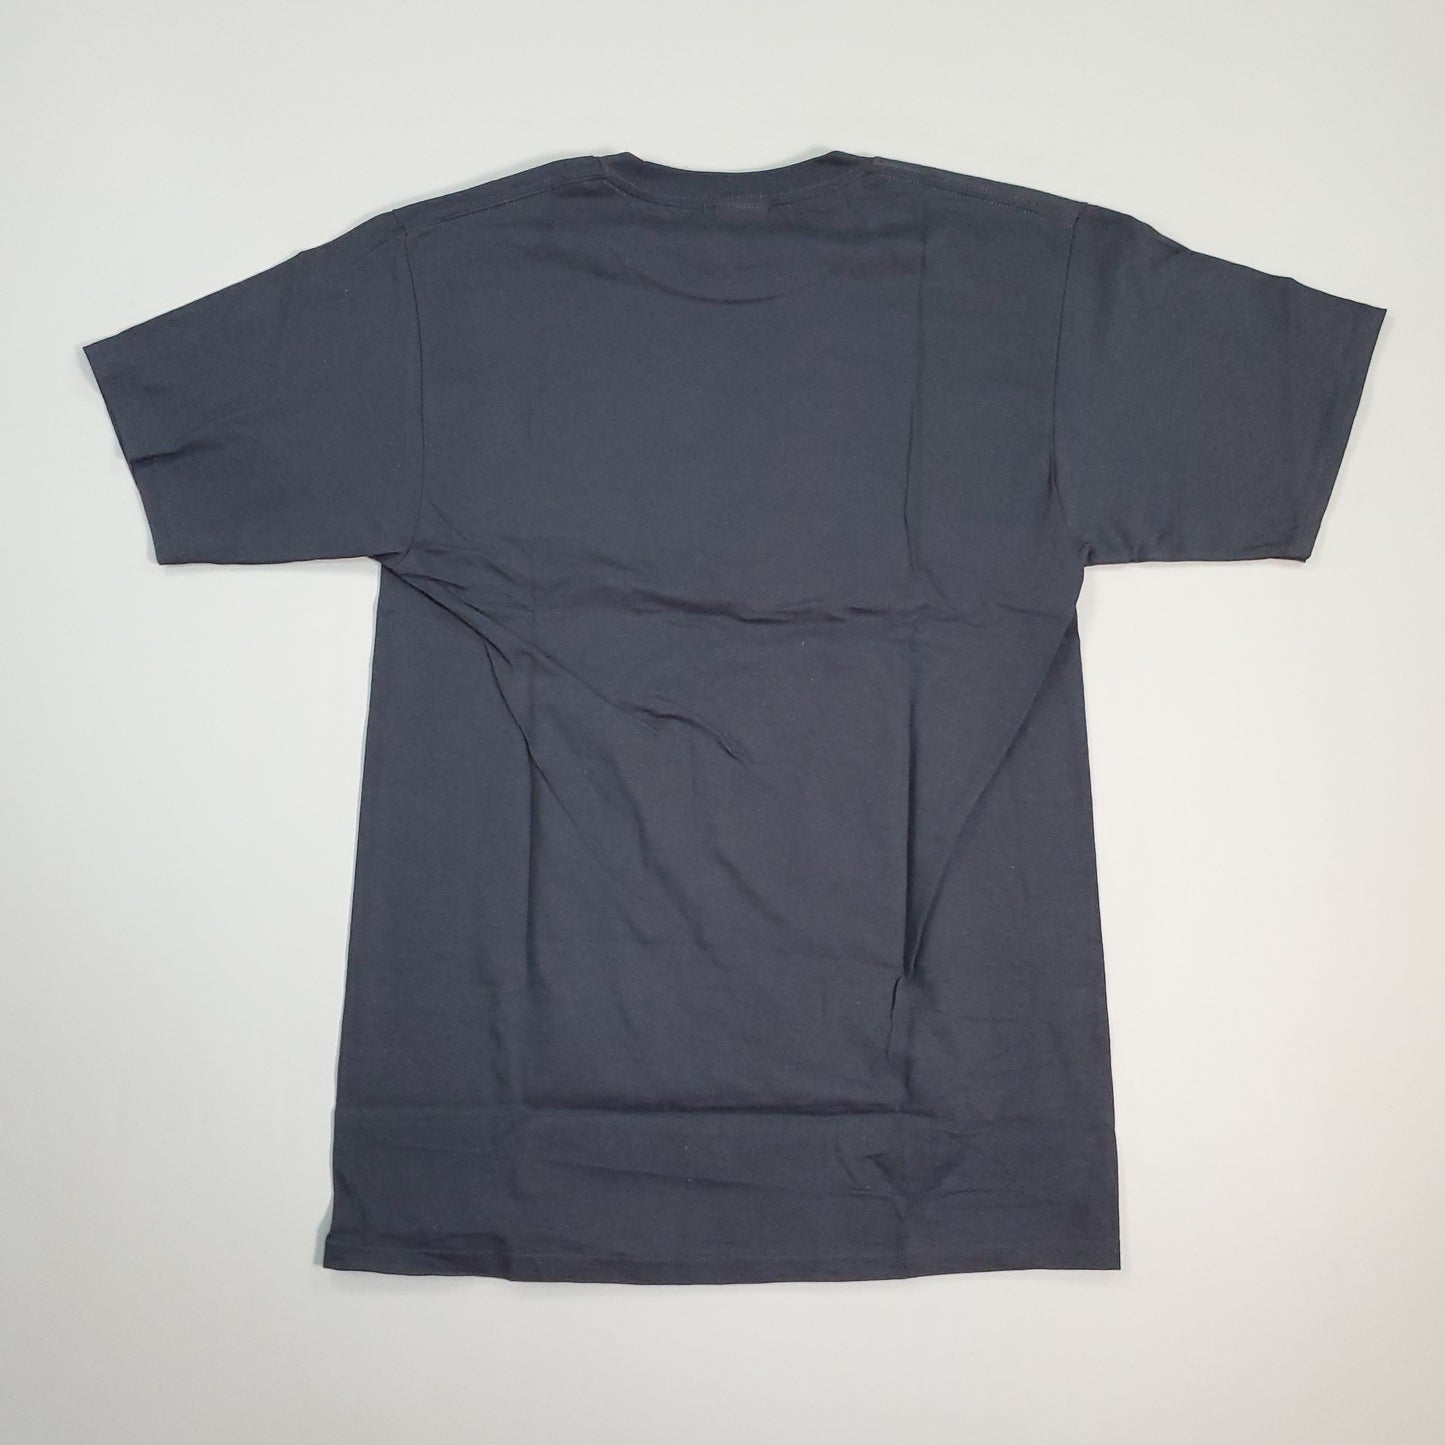 T-MOBILE Tee Shirt Short Sleeve TEX Famous For Care Men's Unisex Sz S Black/Pink (New)